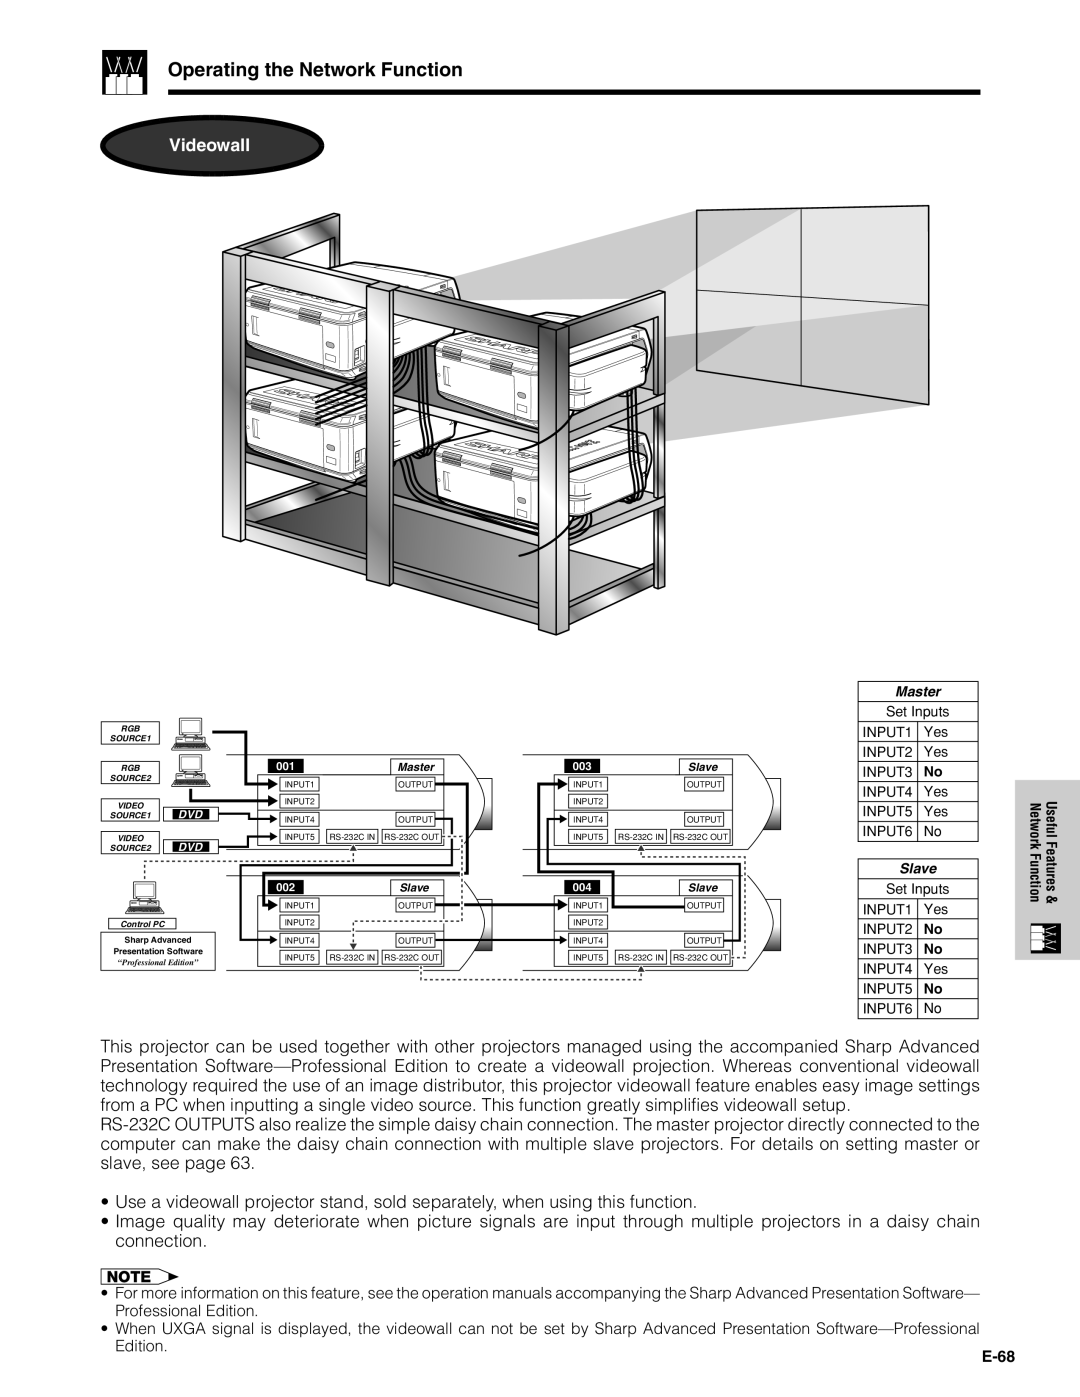 Sharp XG-V10XU operation manual Operating the Network Function, Videowall, E-68 